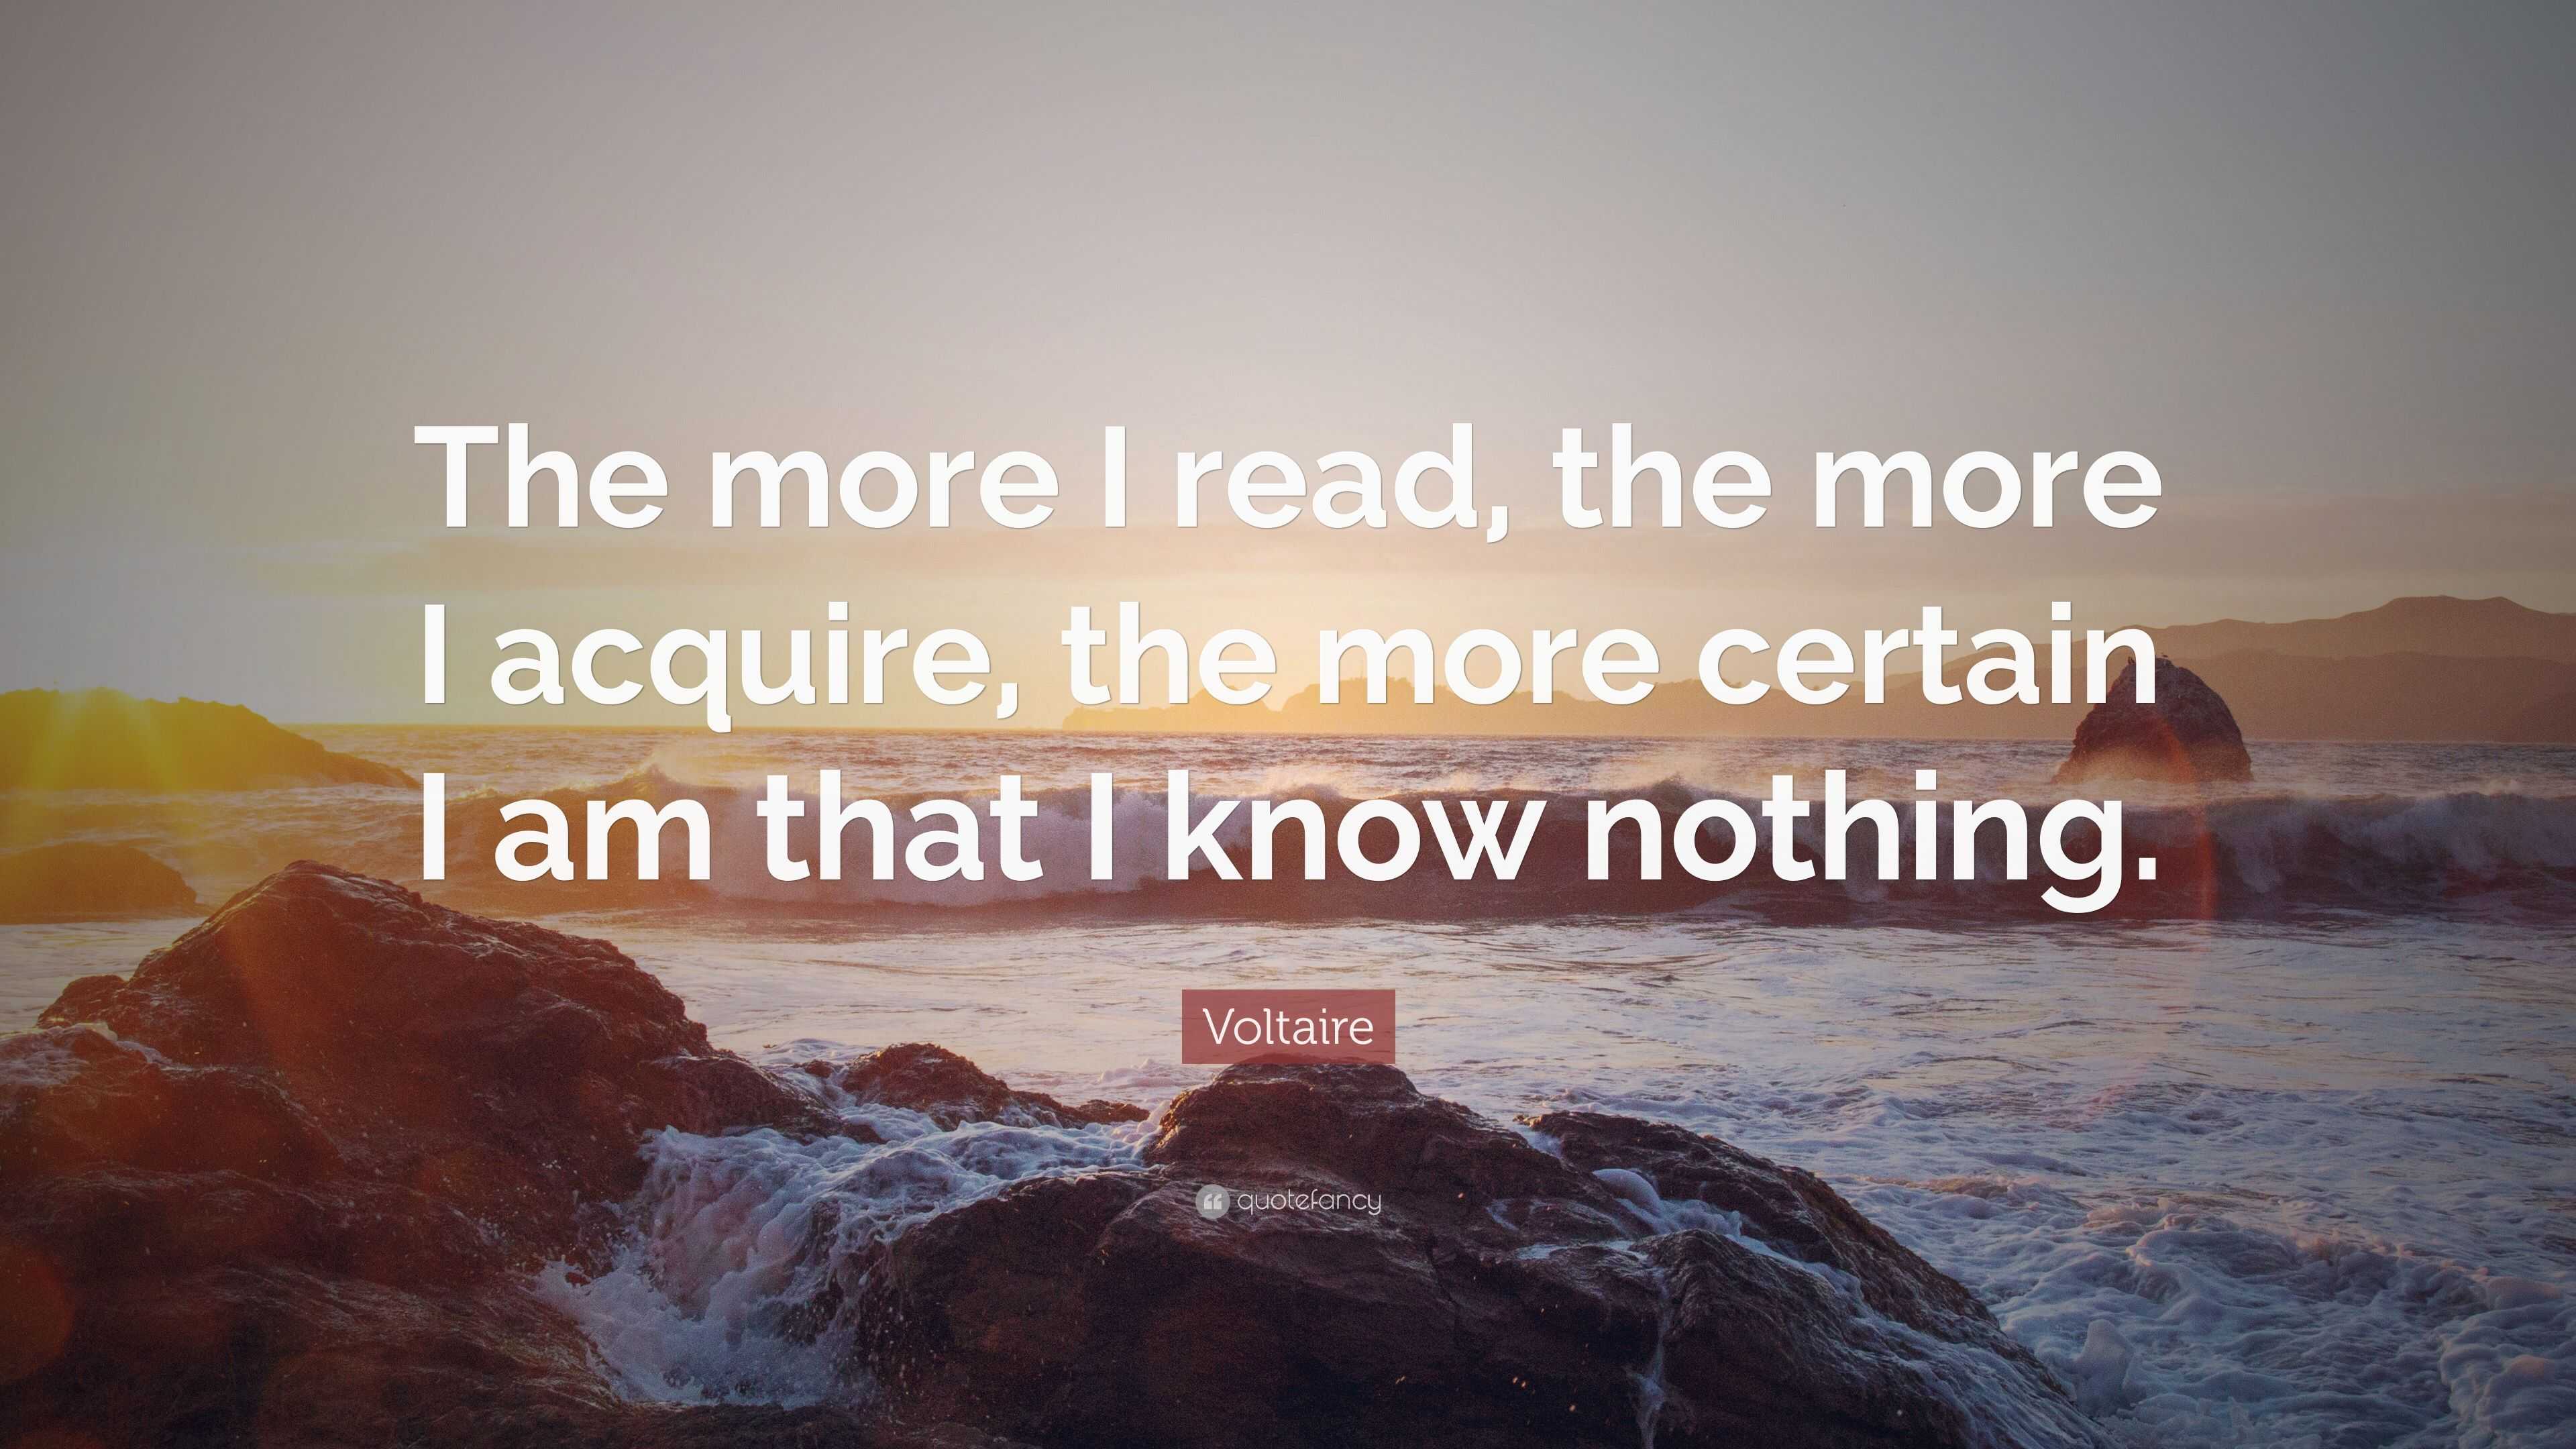 Voltaire Quote: “The more I read, the more I acquire, the more certain